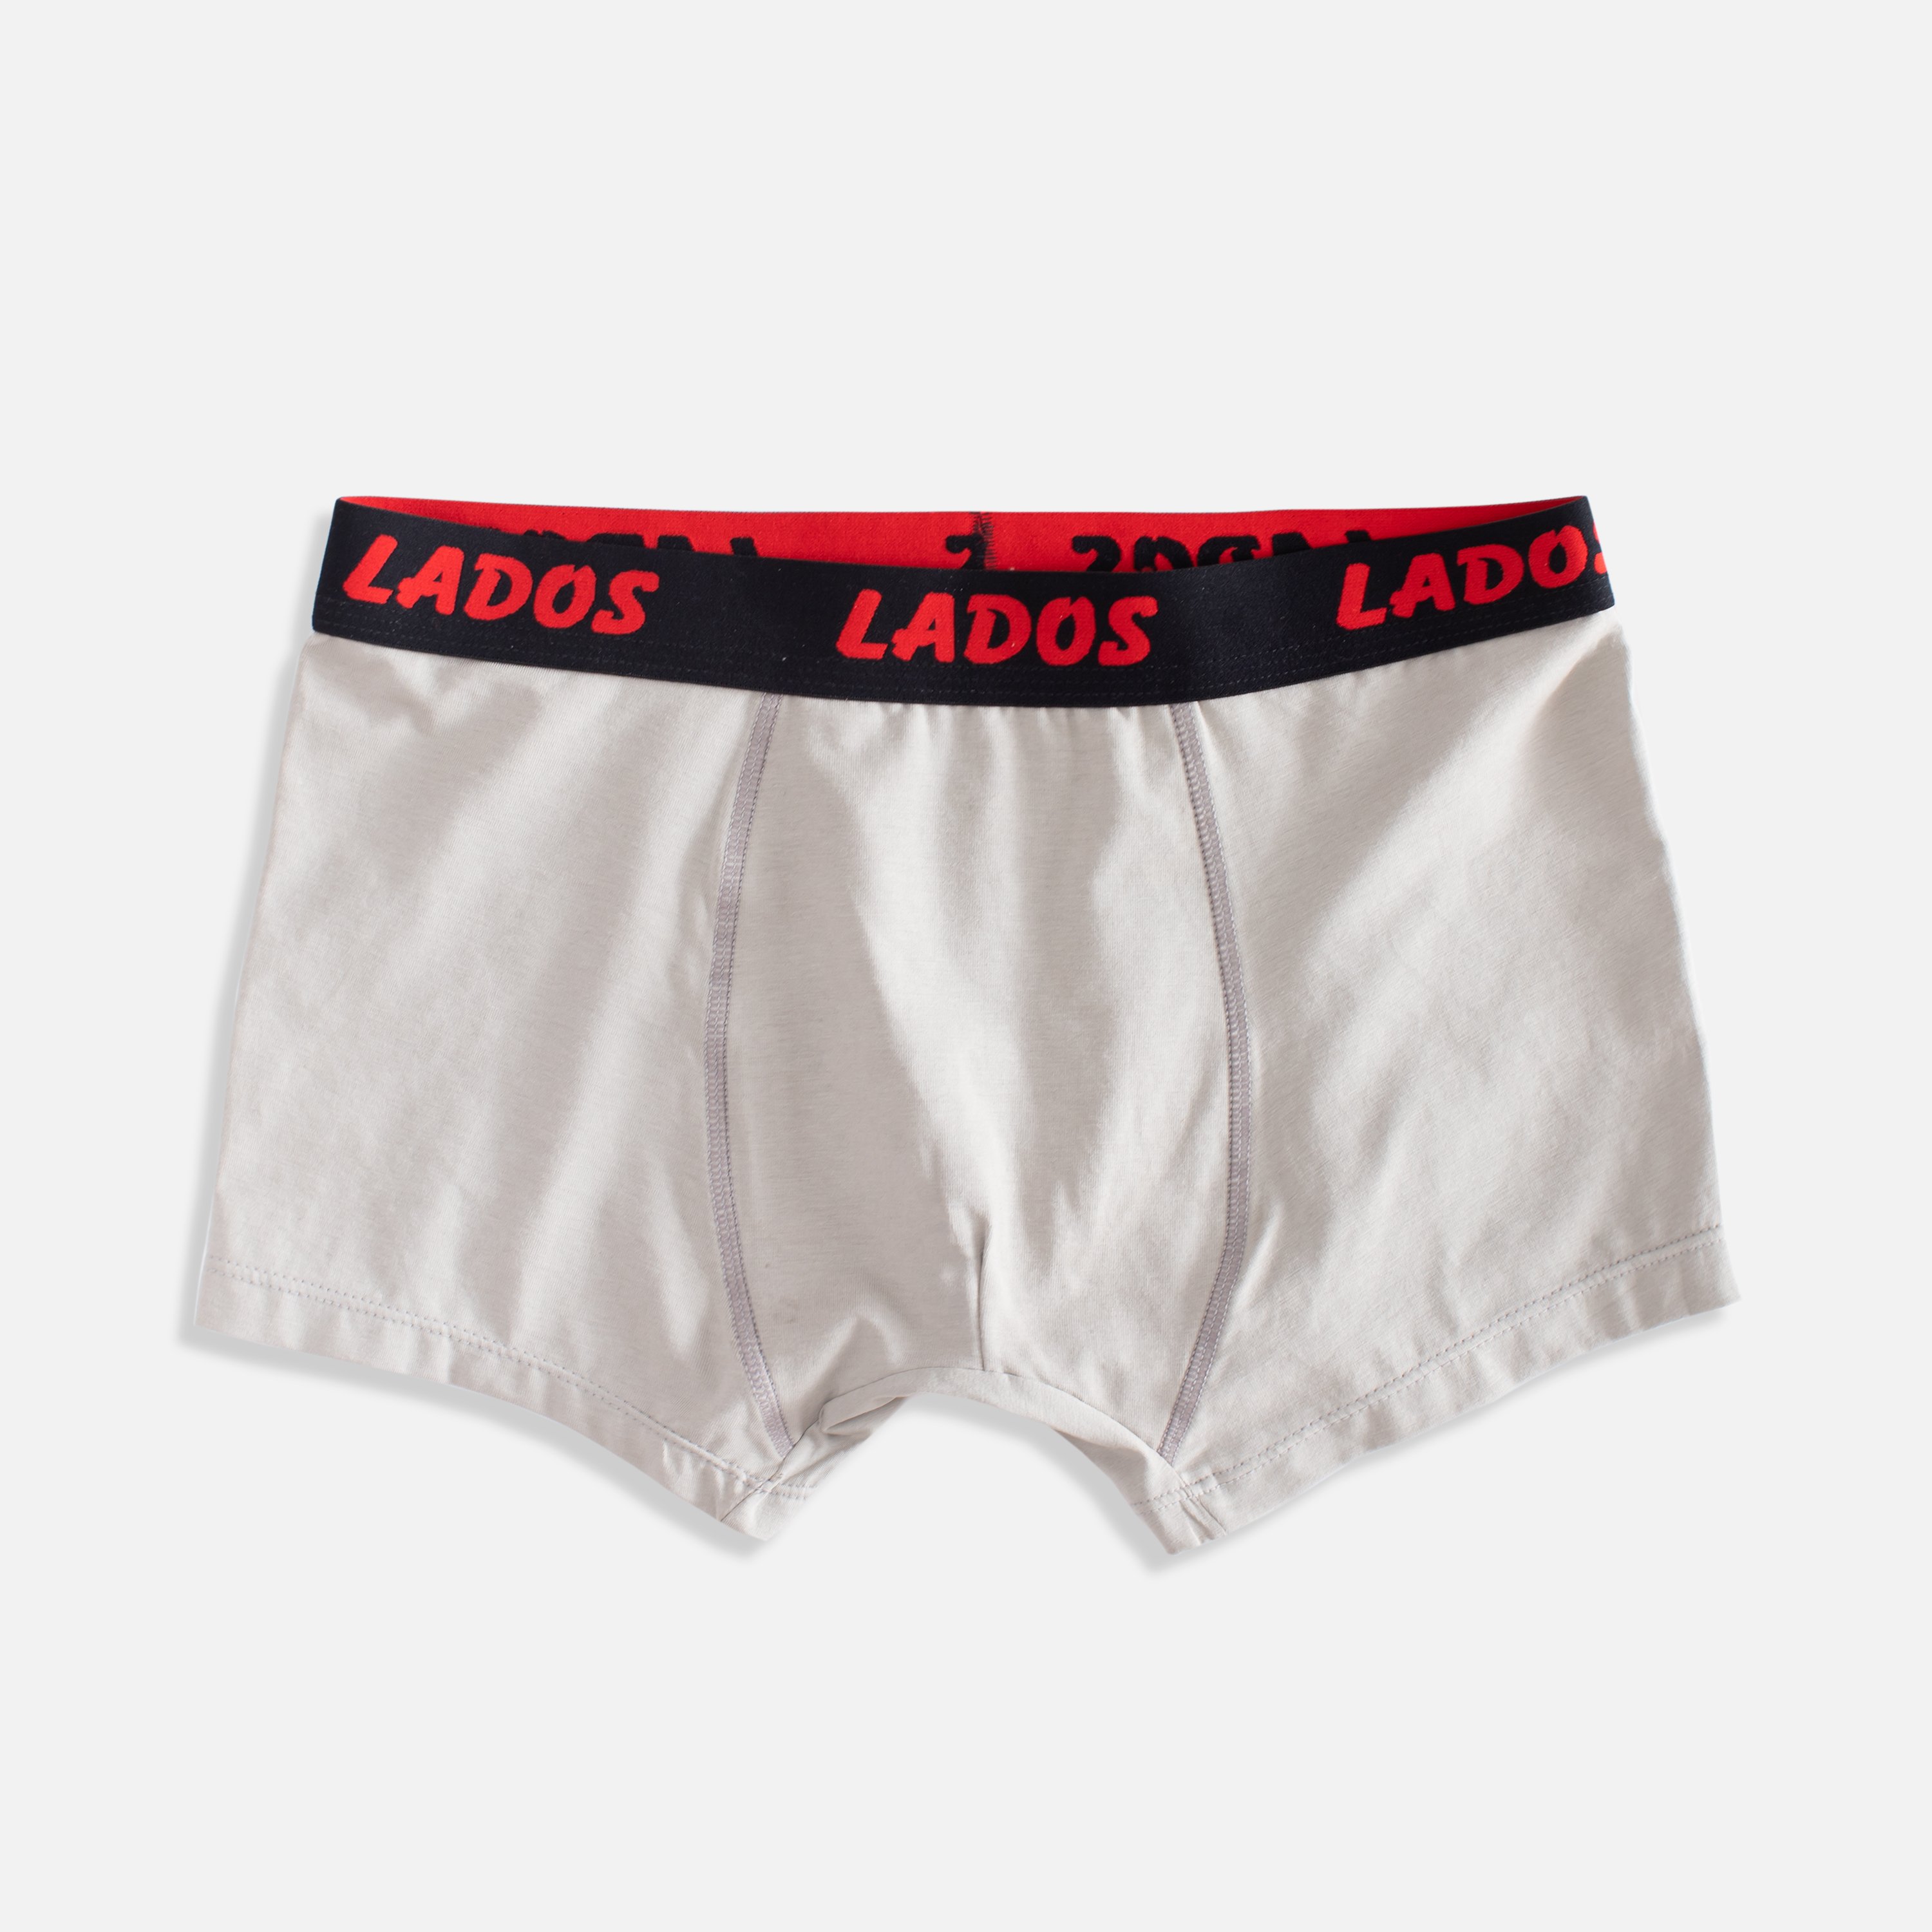 Quần lót boxer nam Lados -  chất thun cotton lạnh cao cấp co giãn mát